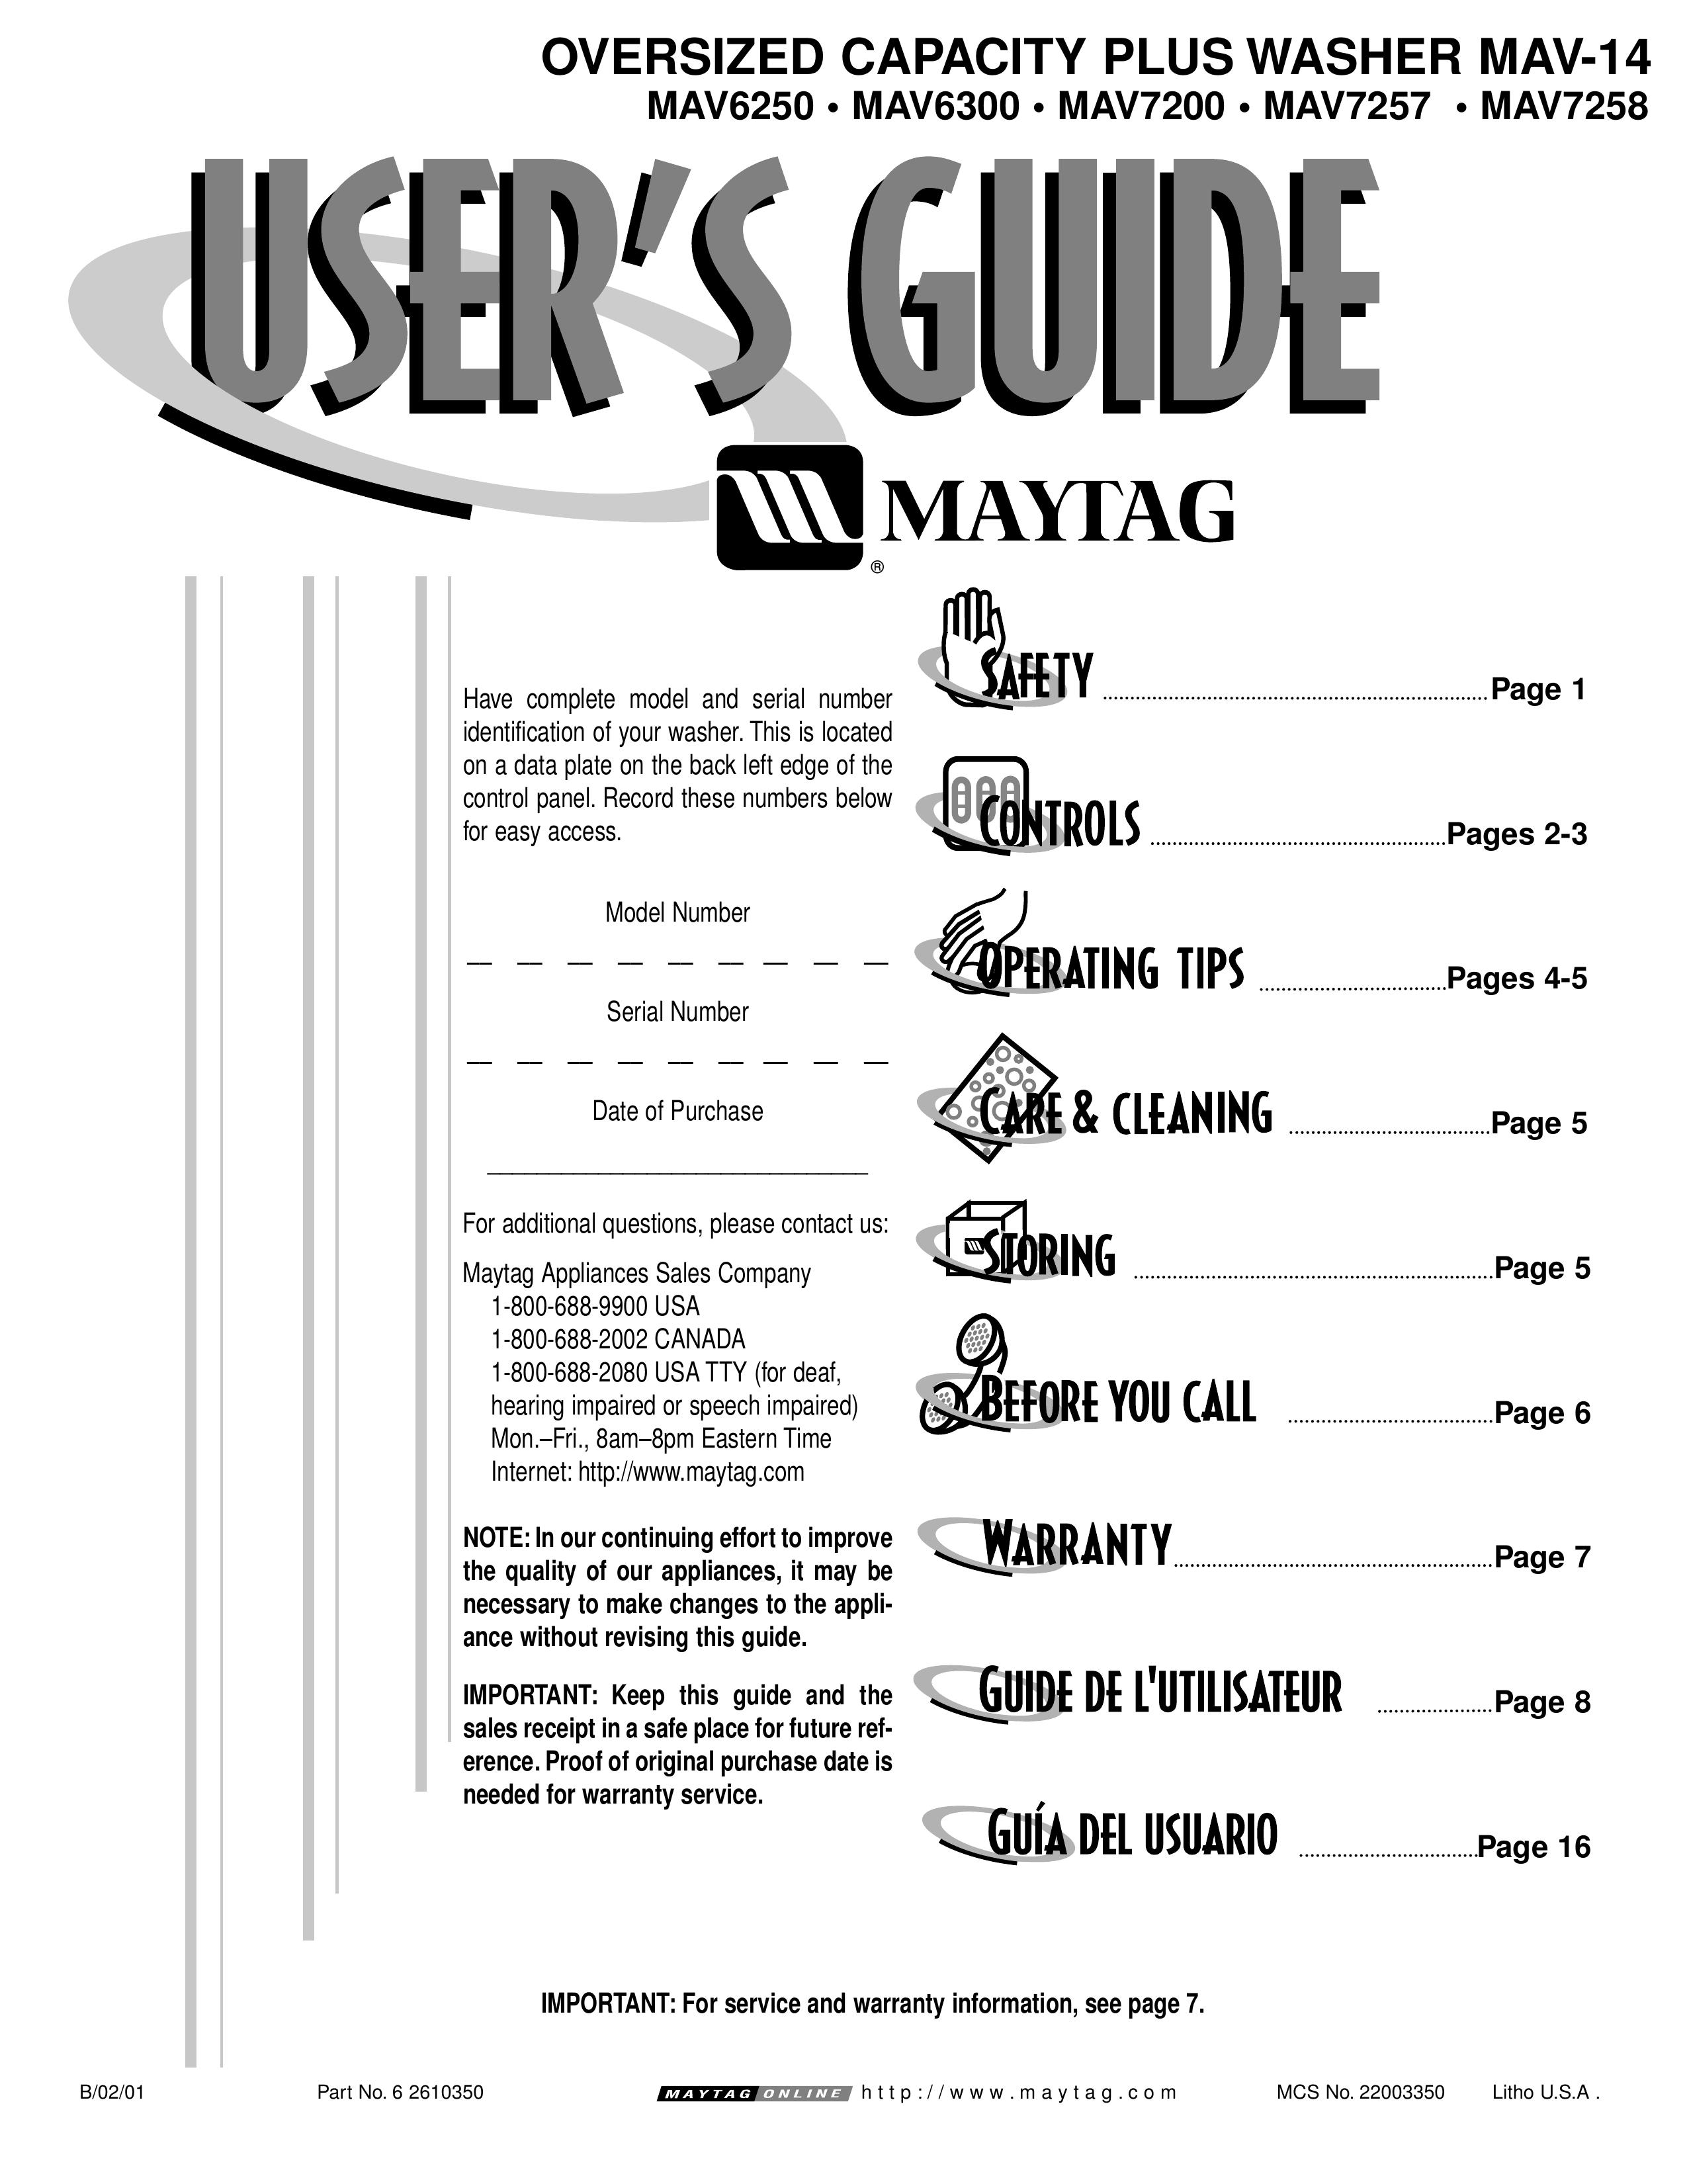 Maytag MAV7200 Washer/Dryer User Manual